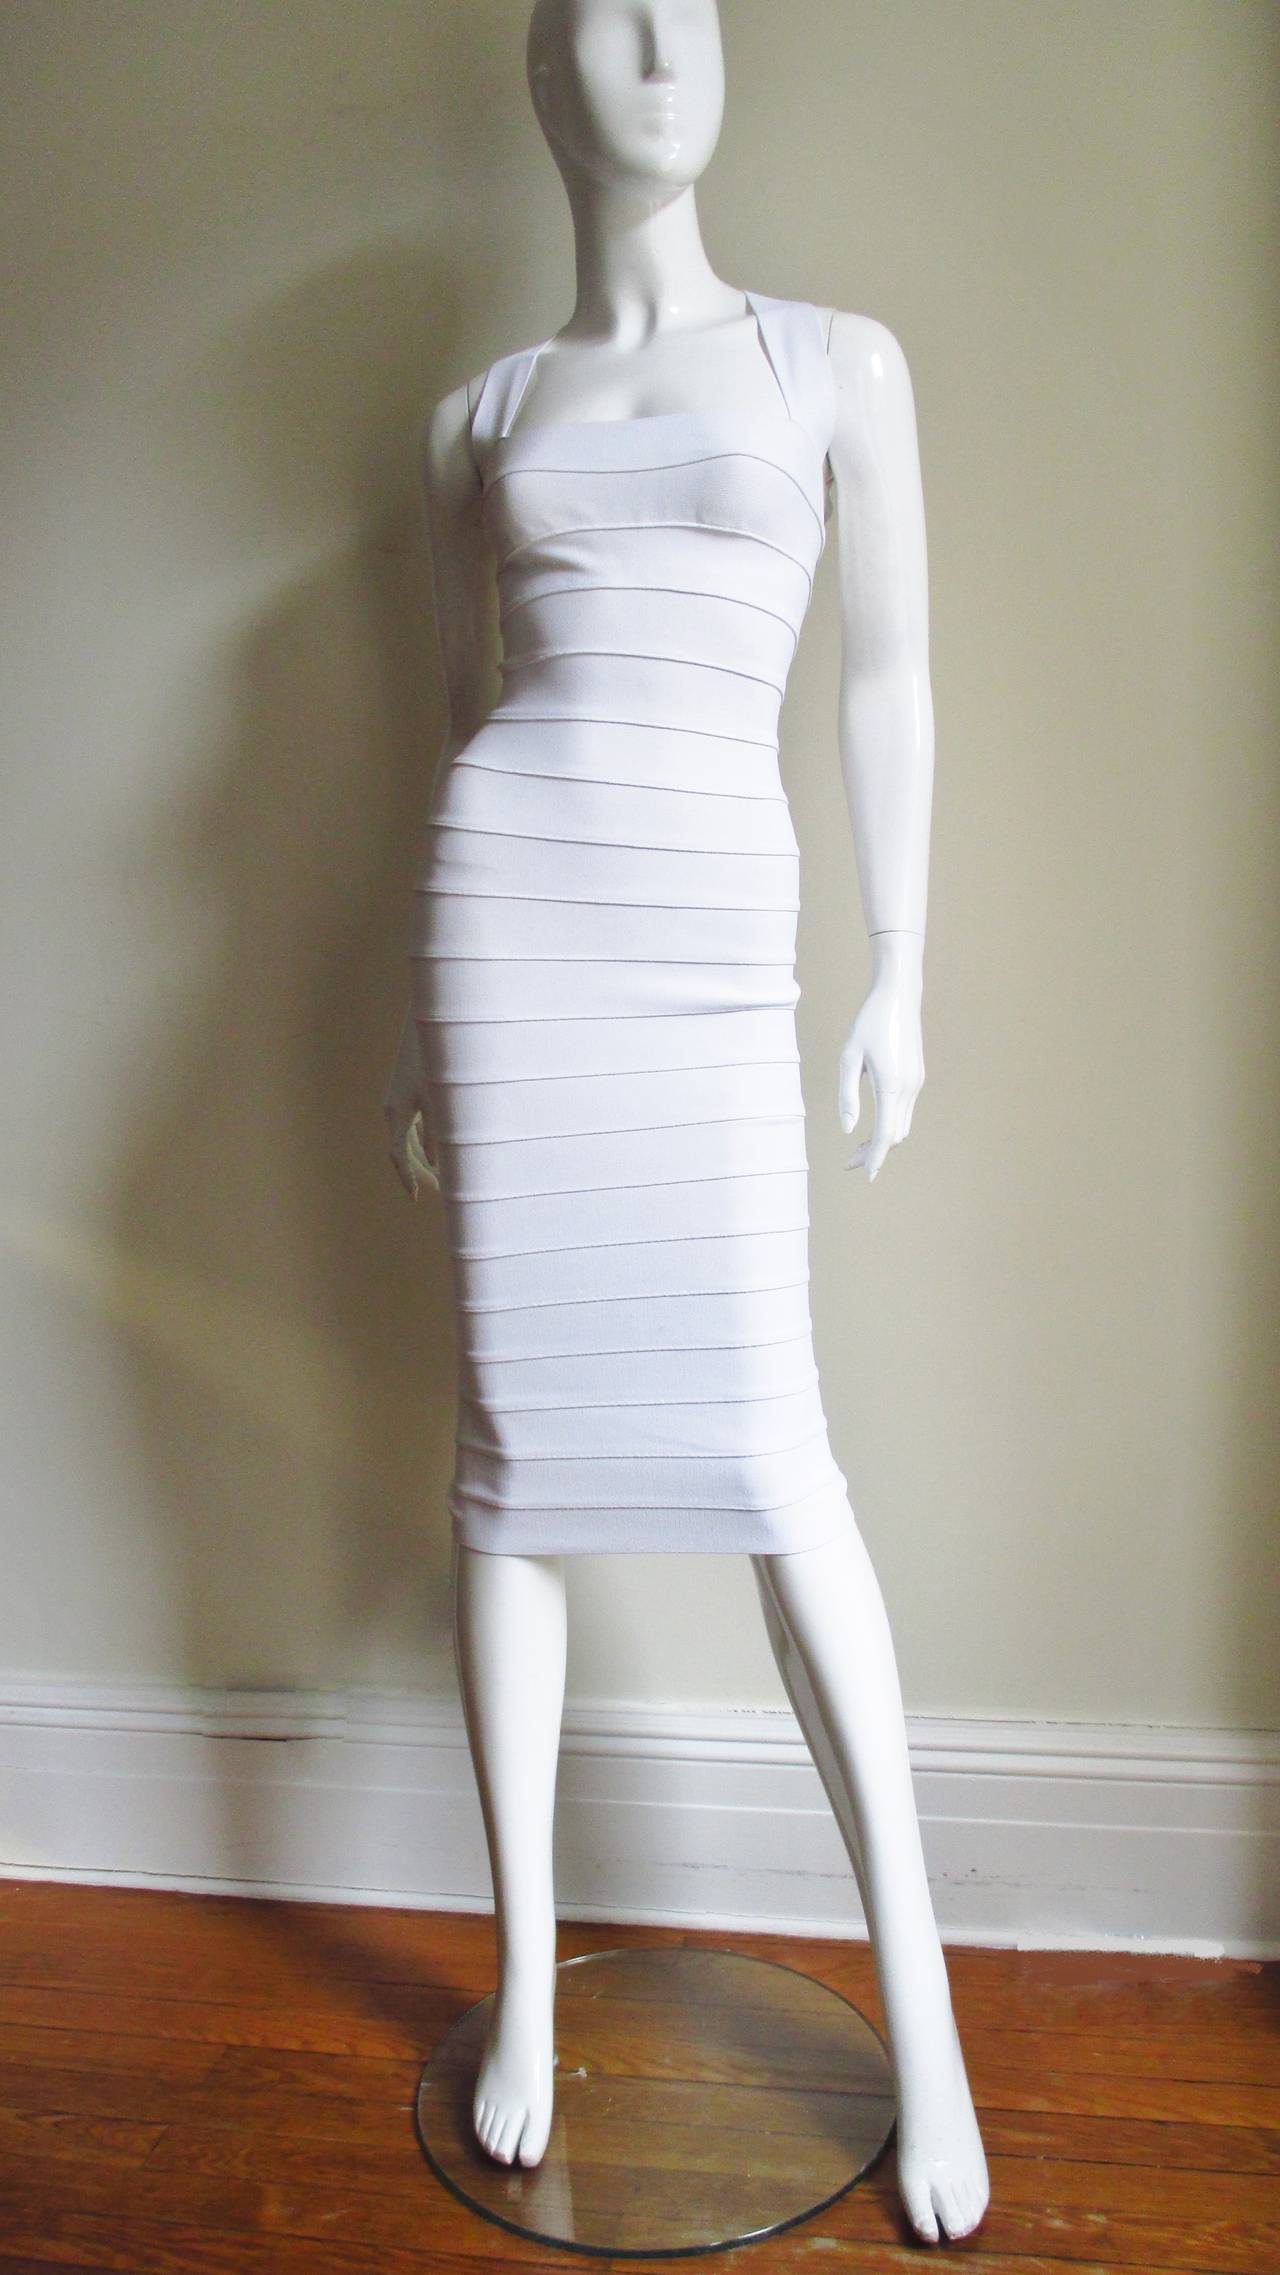 Women's Herve Leger Ultimate White Bodycon Dress